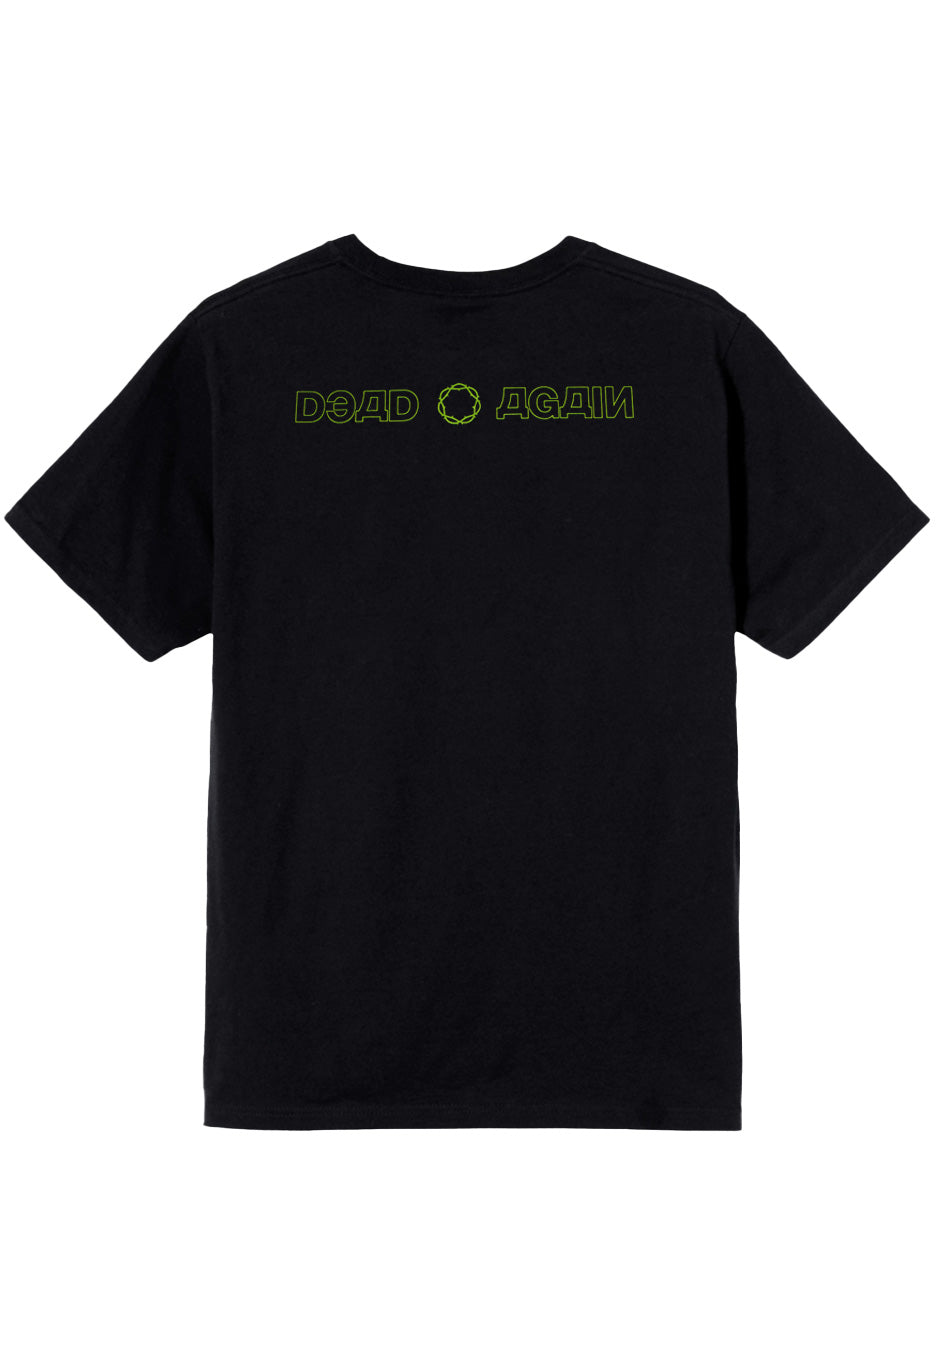 Type O Negative - Dead Again Coffins - T-Shirt